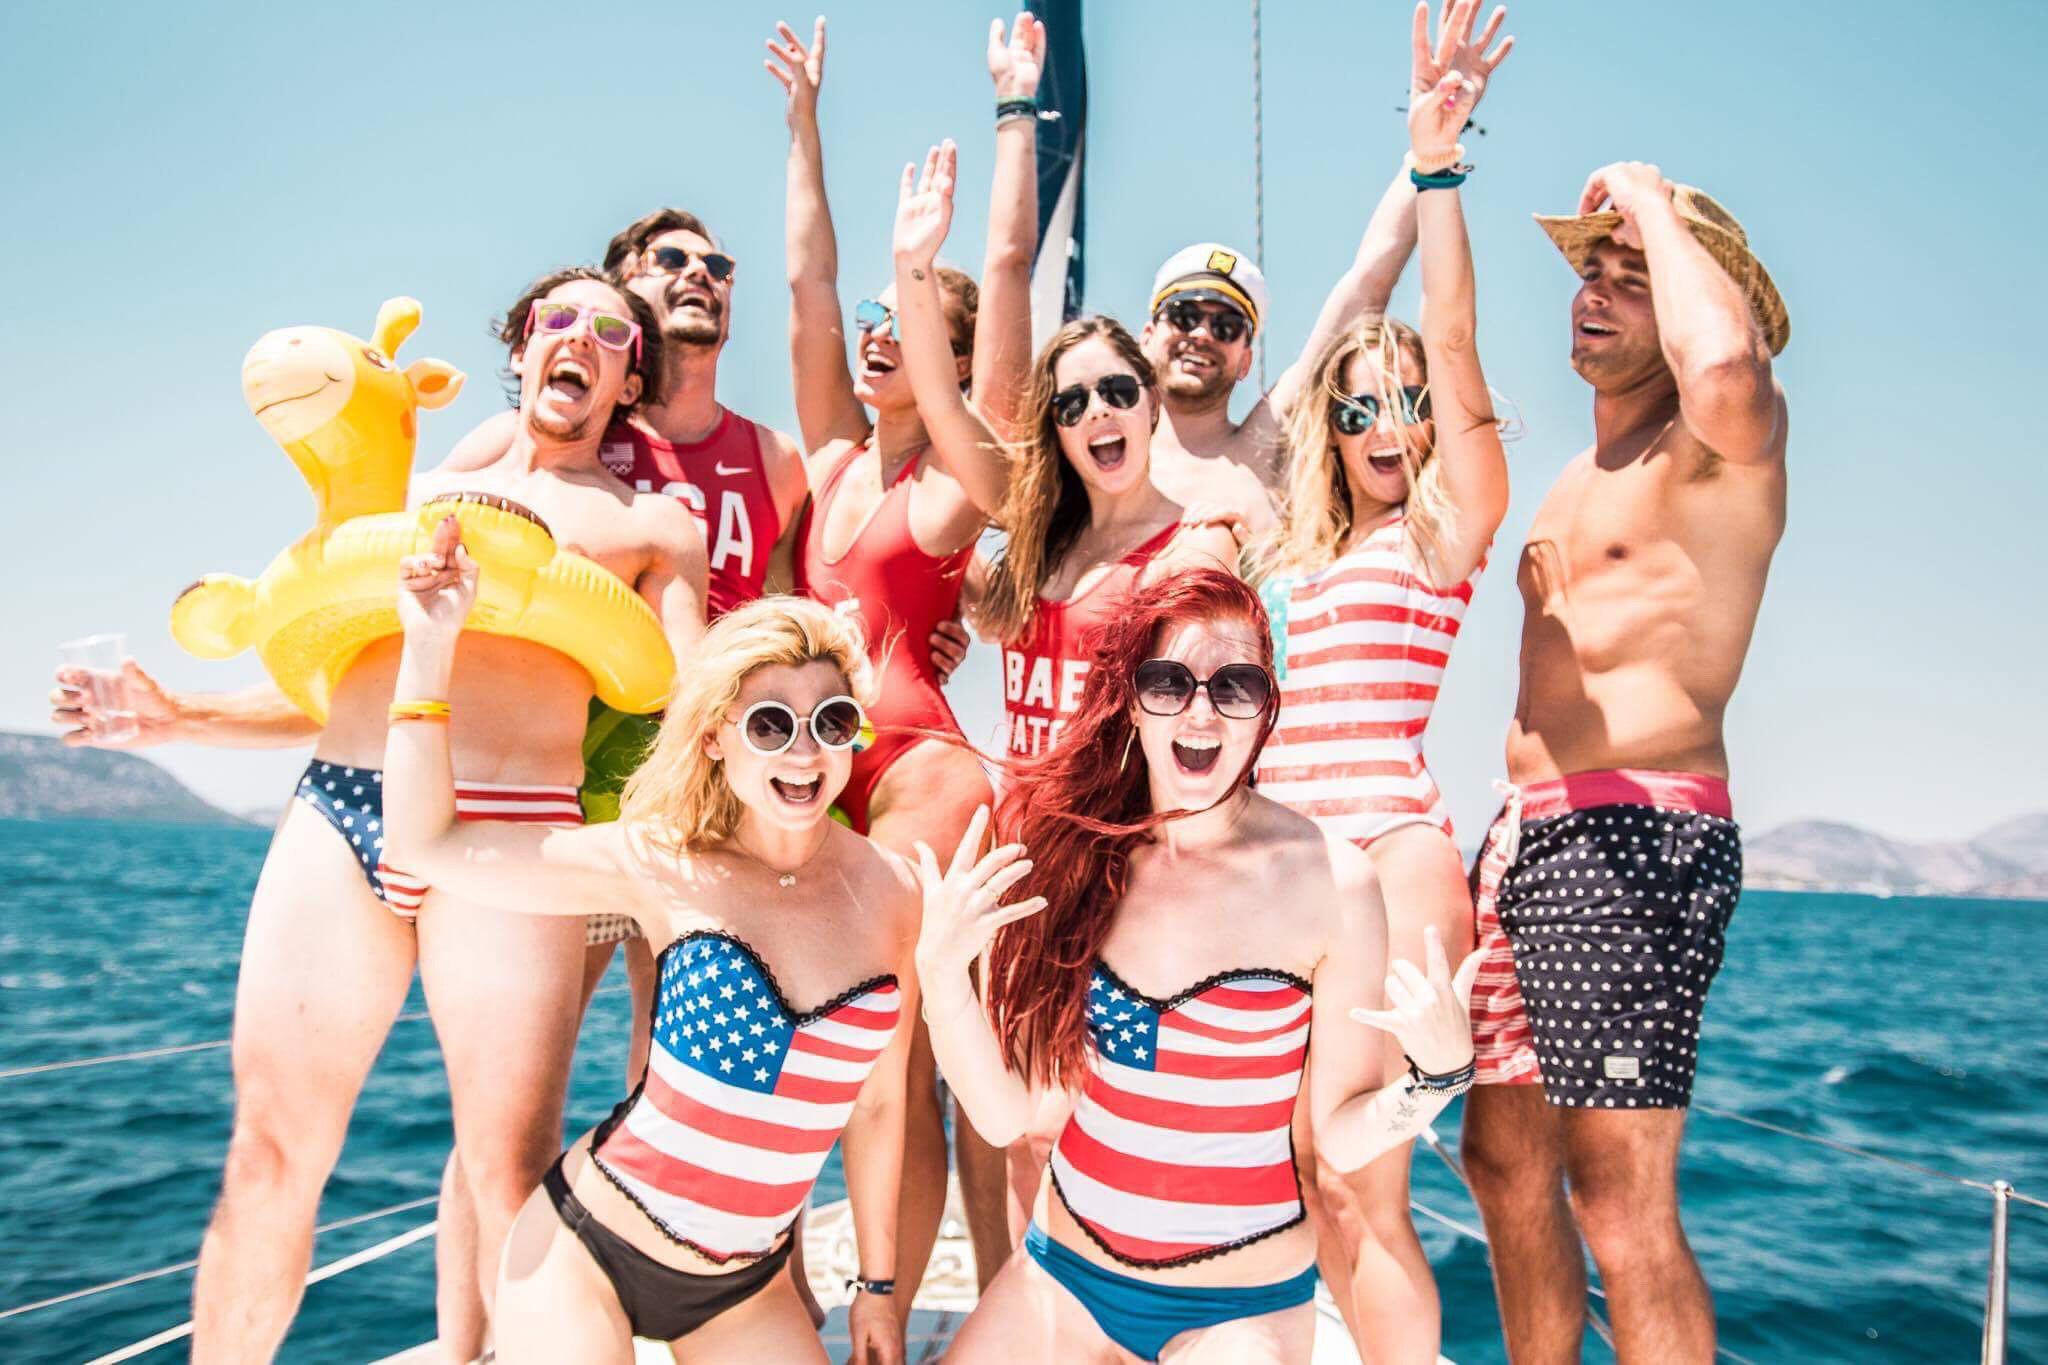 The Yacht Week regatta - American themed!